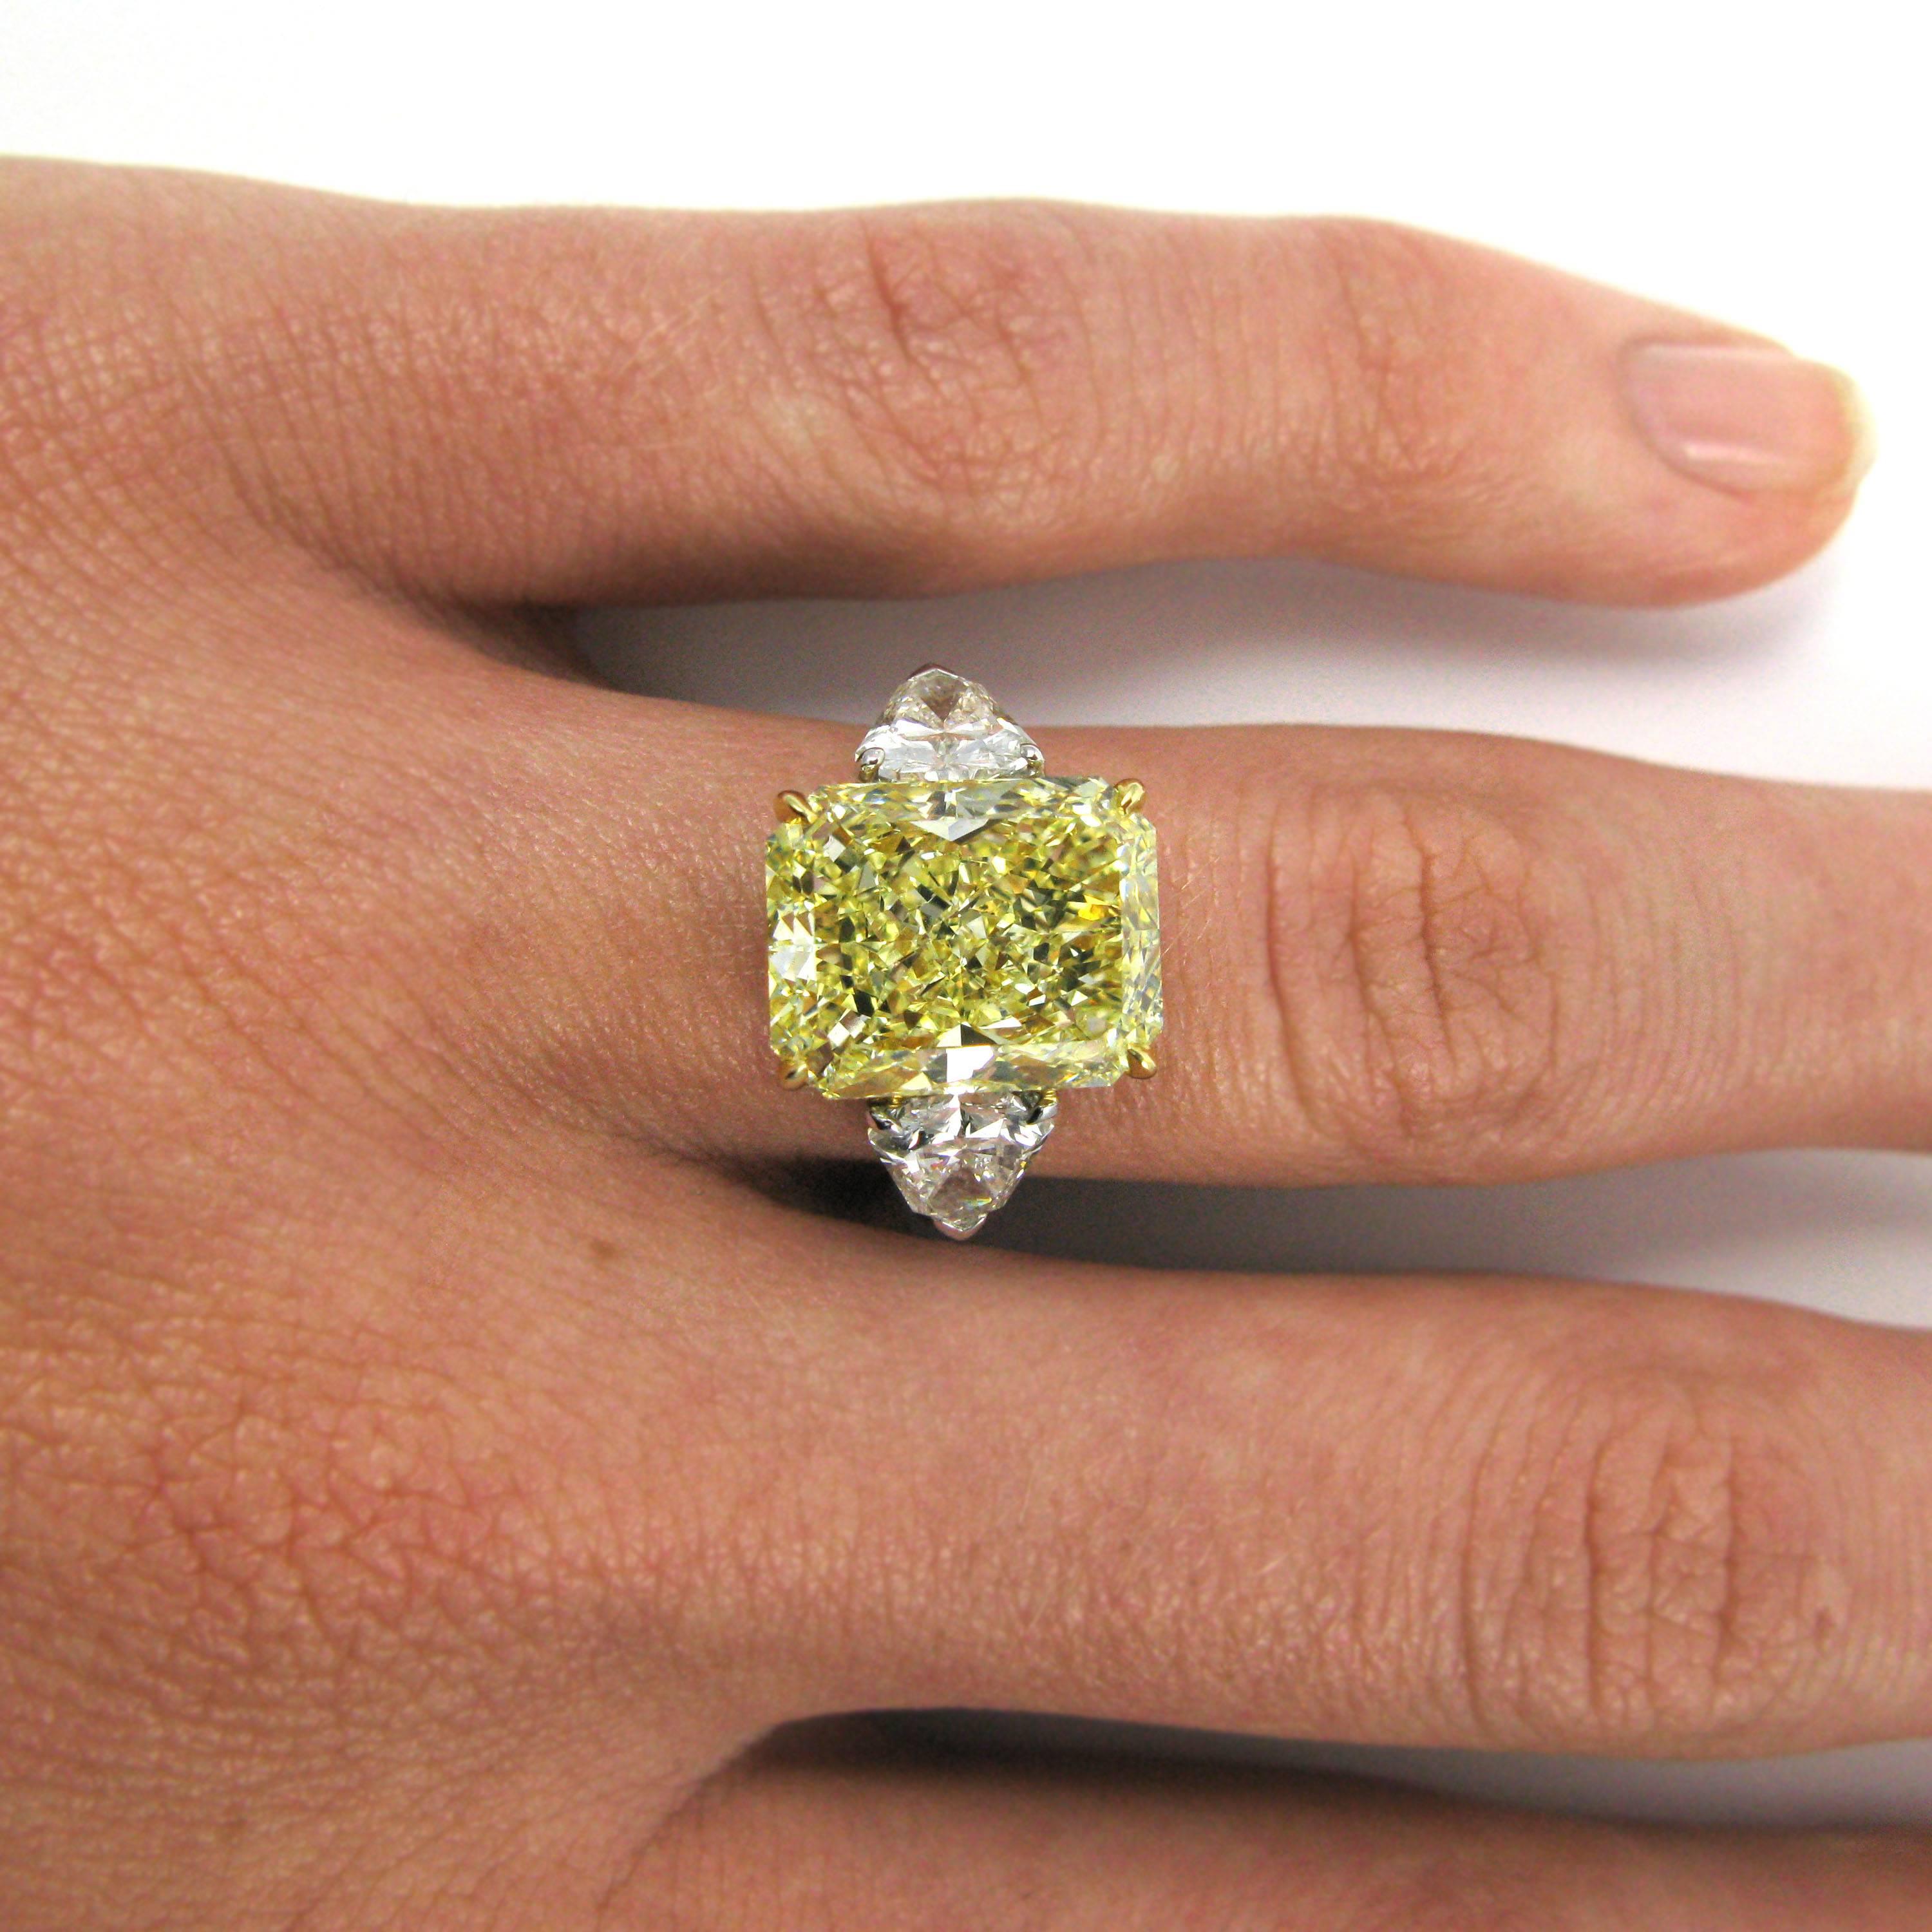 Women's 7.17 Carat Fancy Yellow Radiant Cut Diamond Ring GIA